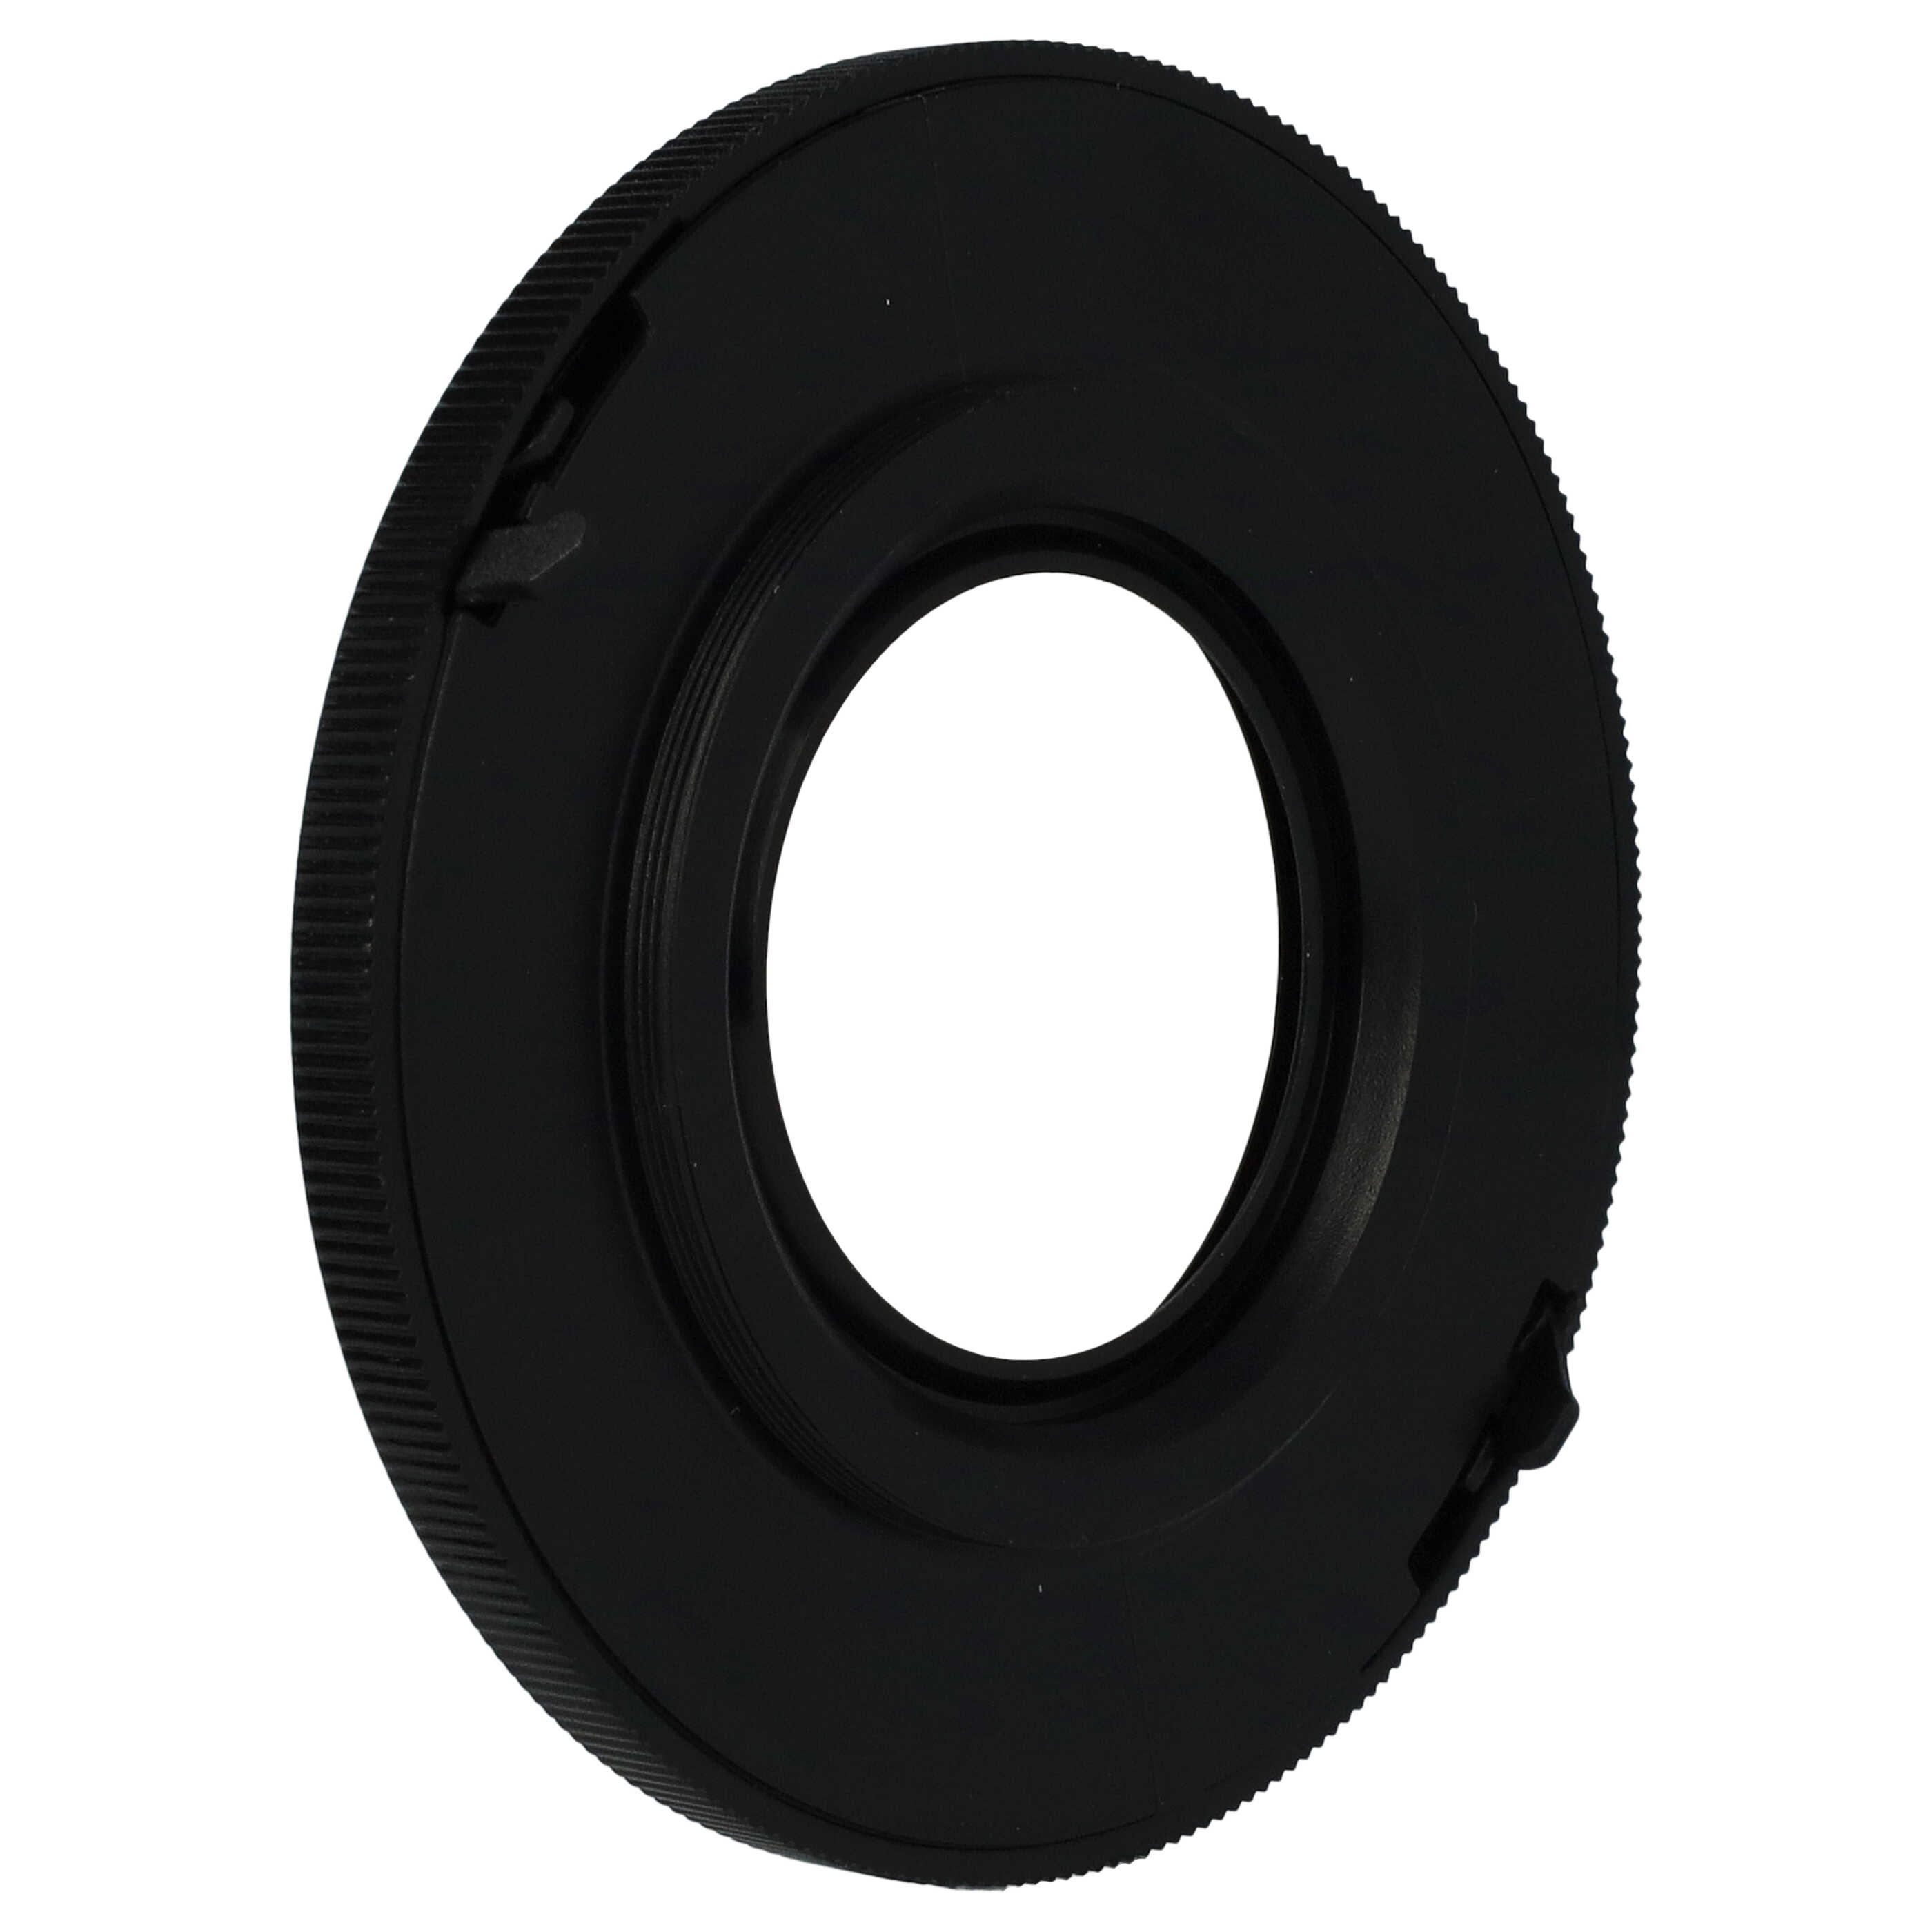 Tapa objetivo automático 63mm para cámara Sony SELP1650 16-50mm f/3.5-5.6, PZ 16-50mm F3.5-5.6, plástico negro